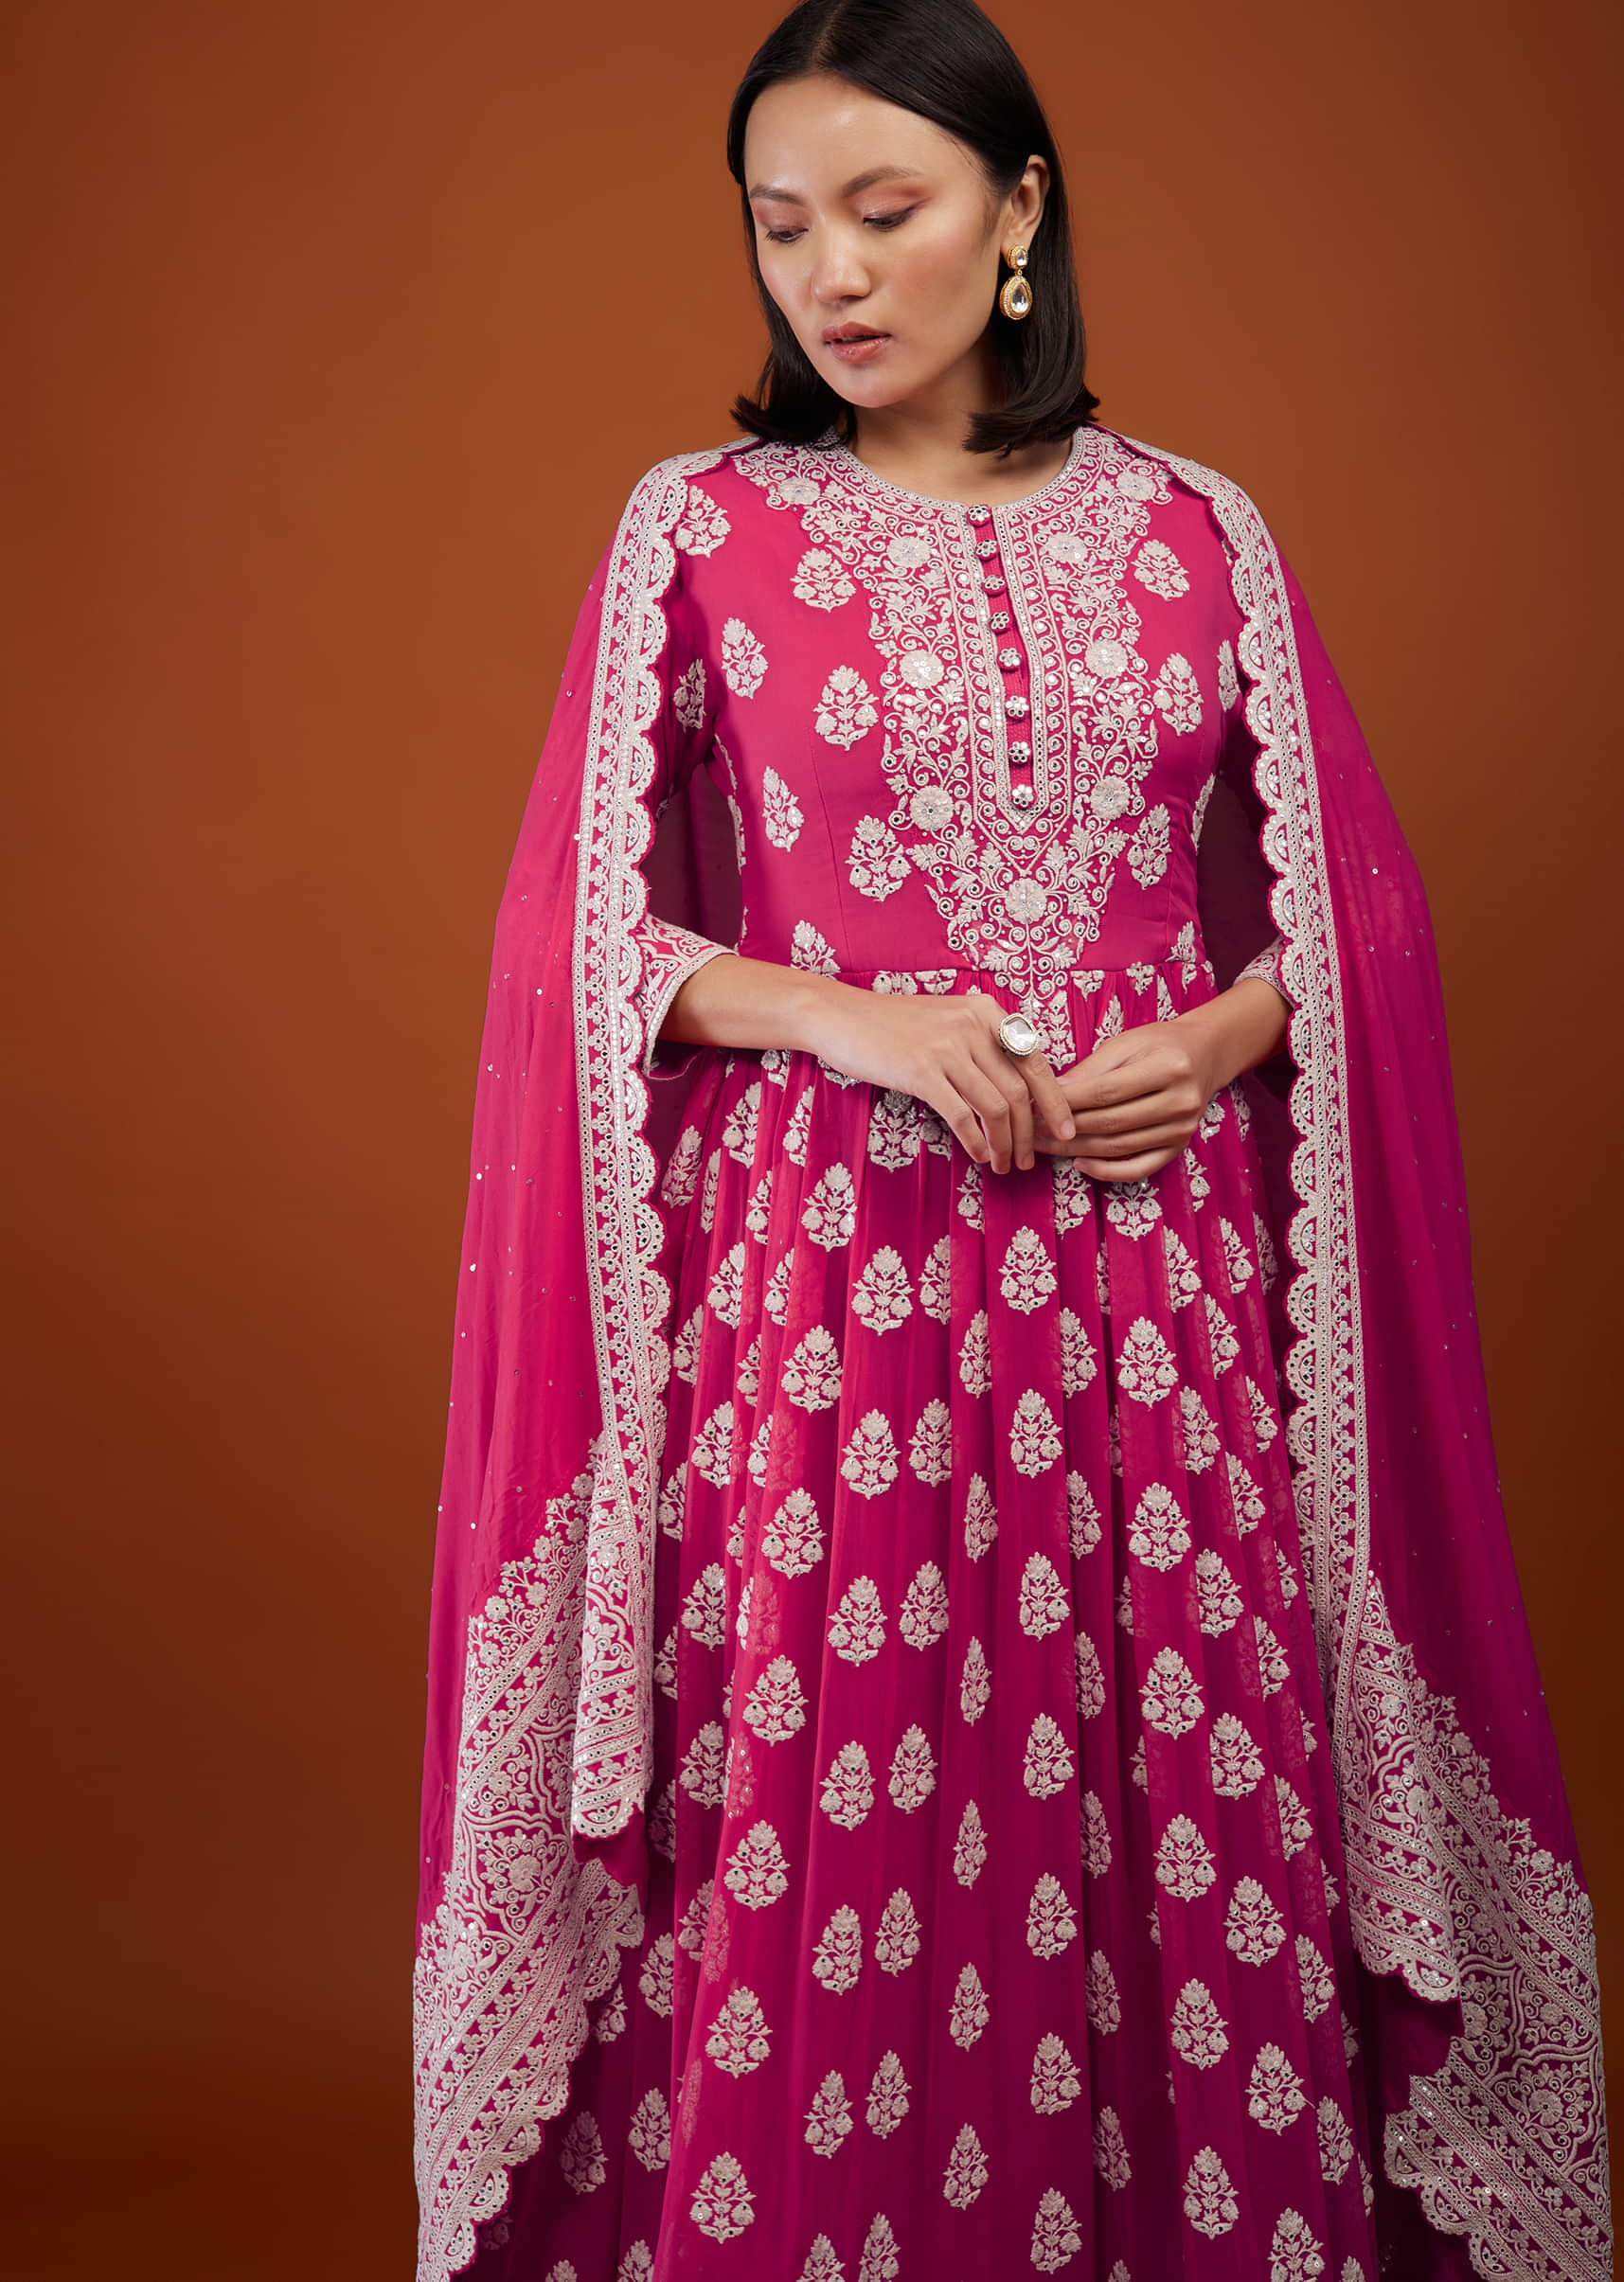 Azalea Pink Embroidered Anarkali Suit In Georgette